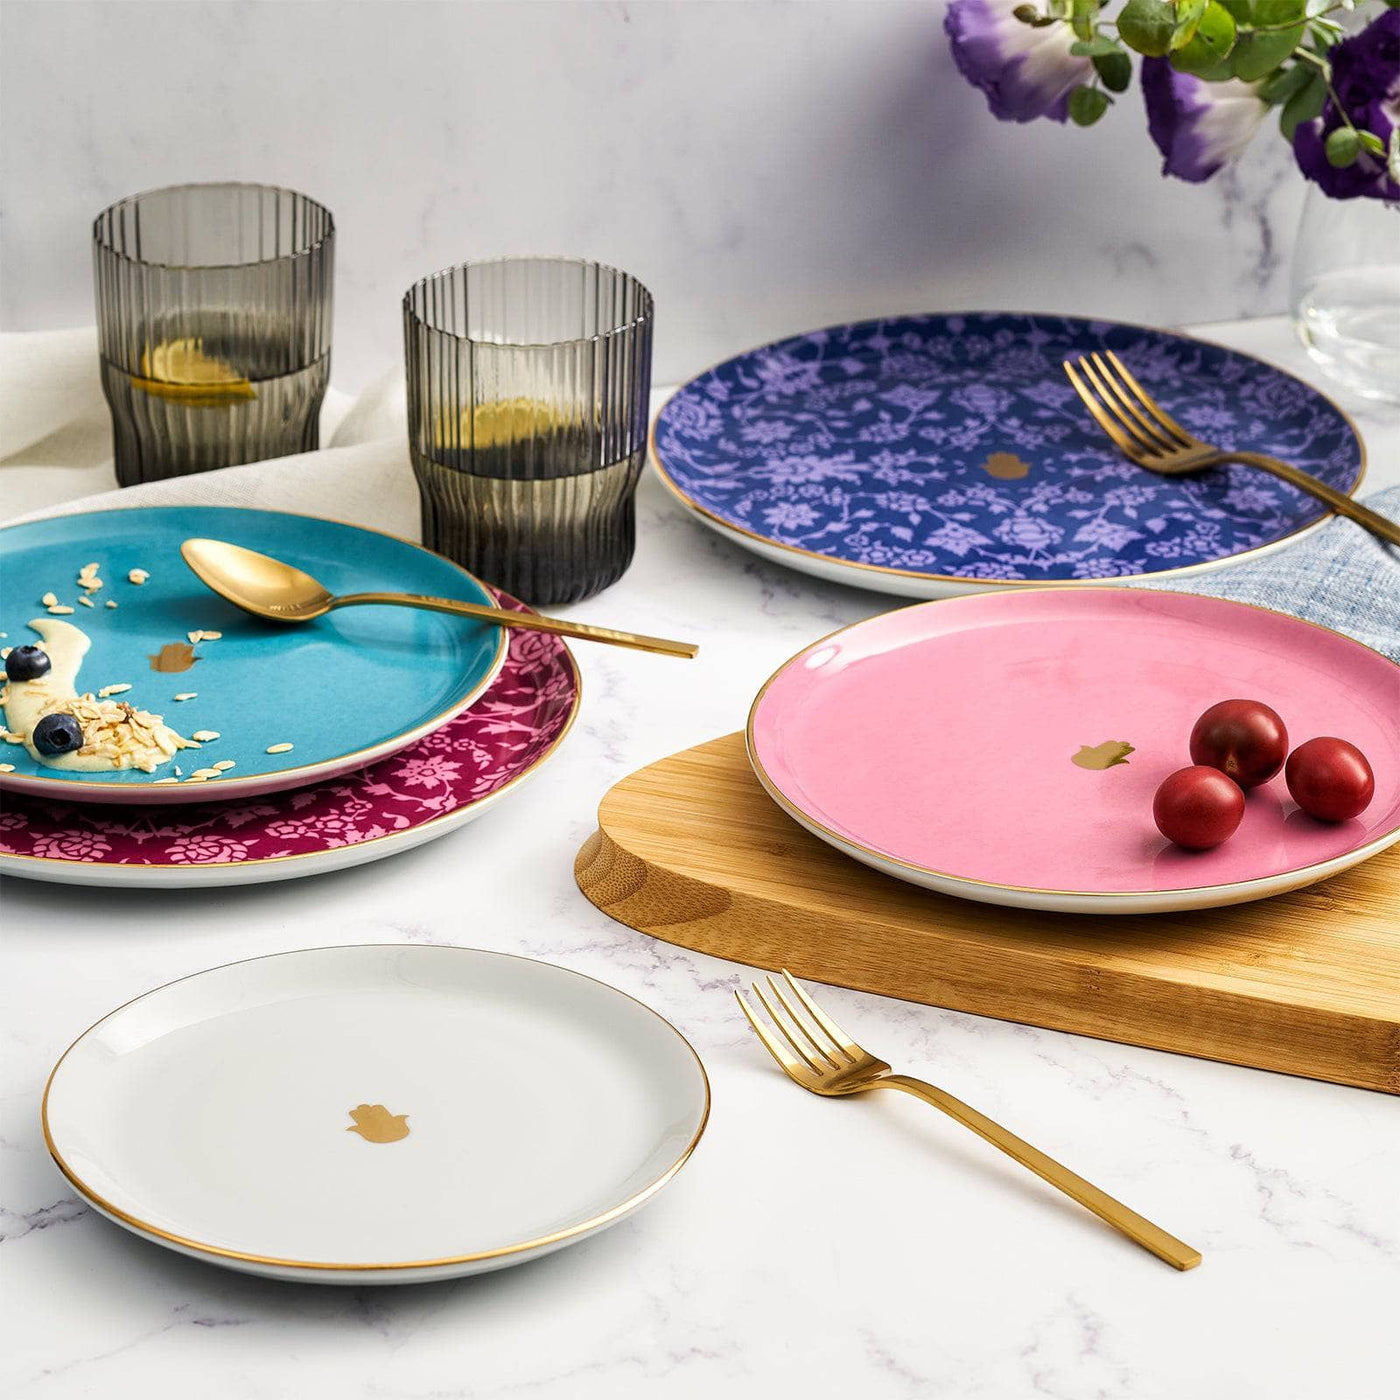 Glamorous Set of 6 Dinner Plates, Fuchsia, 24 cm Plates sazy.com